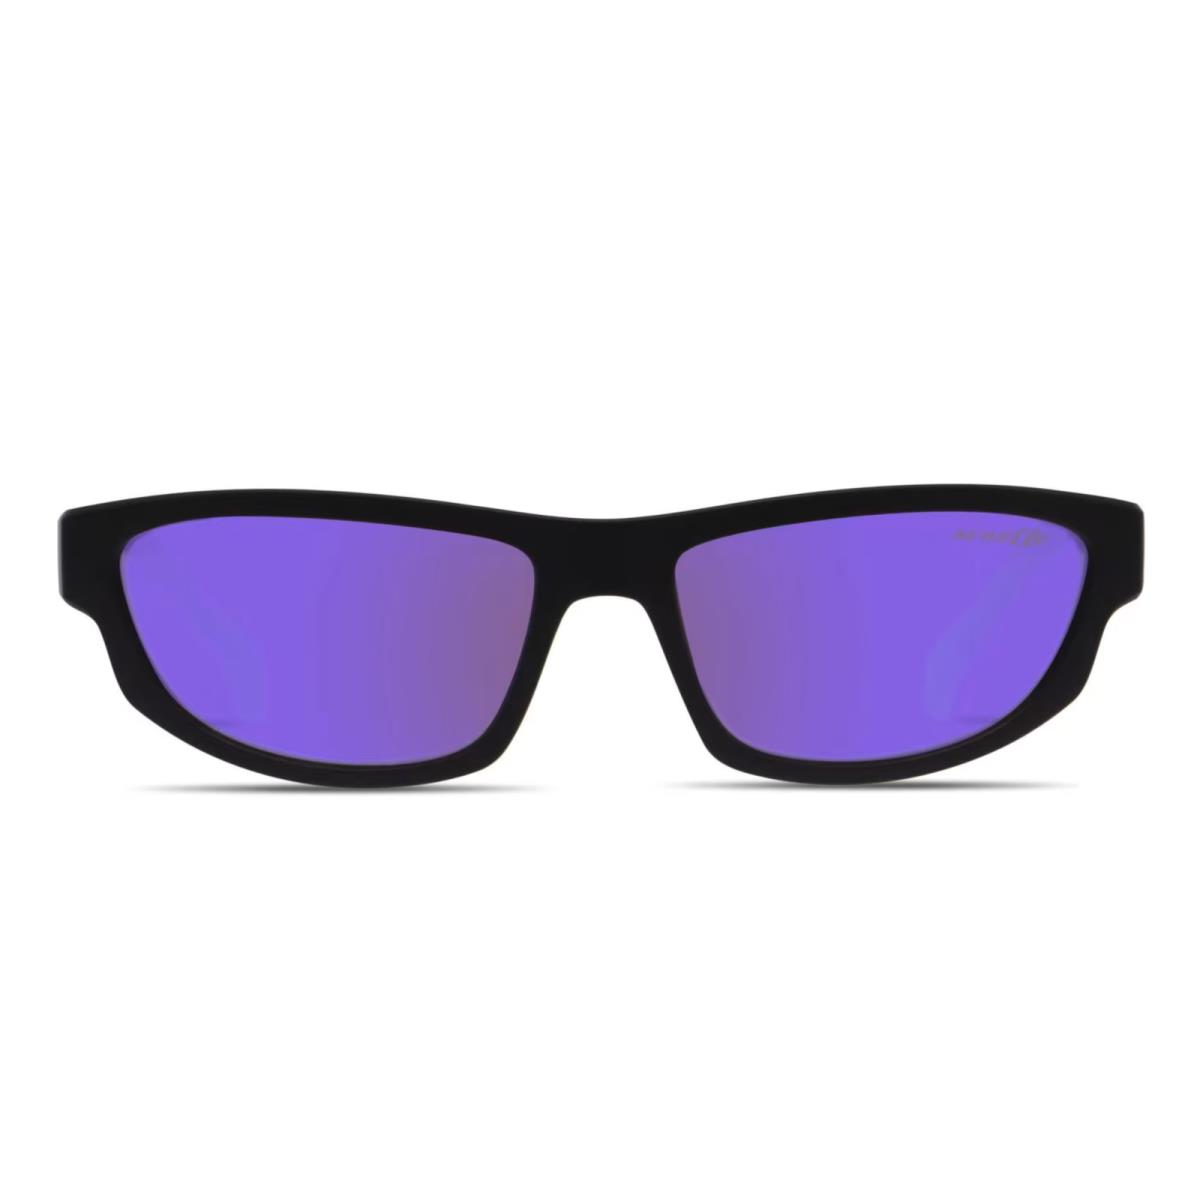 Arnette Lost Boy 4260 01/4V Black Purple Mirrored Sunglasses